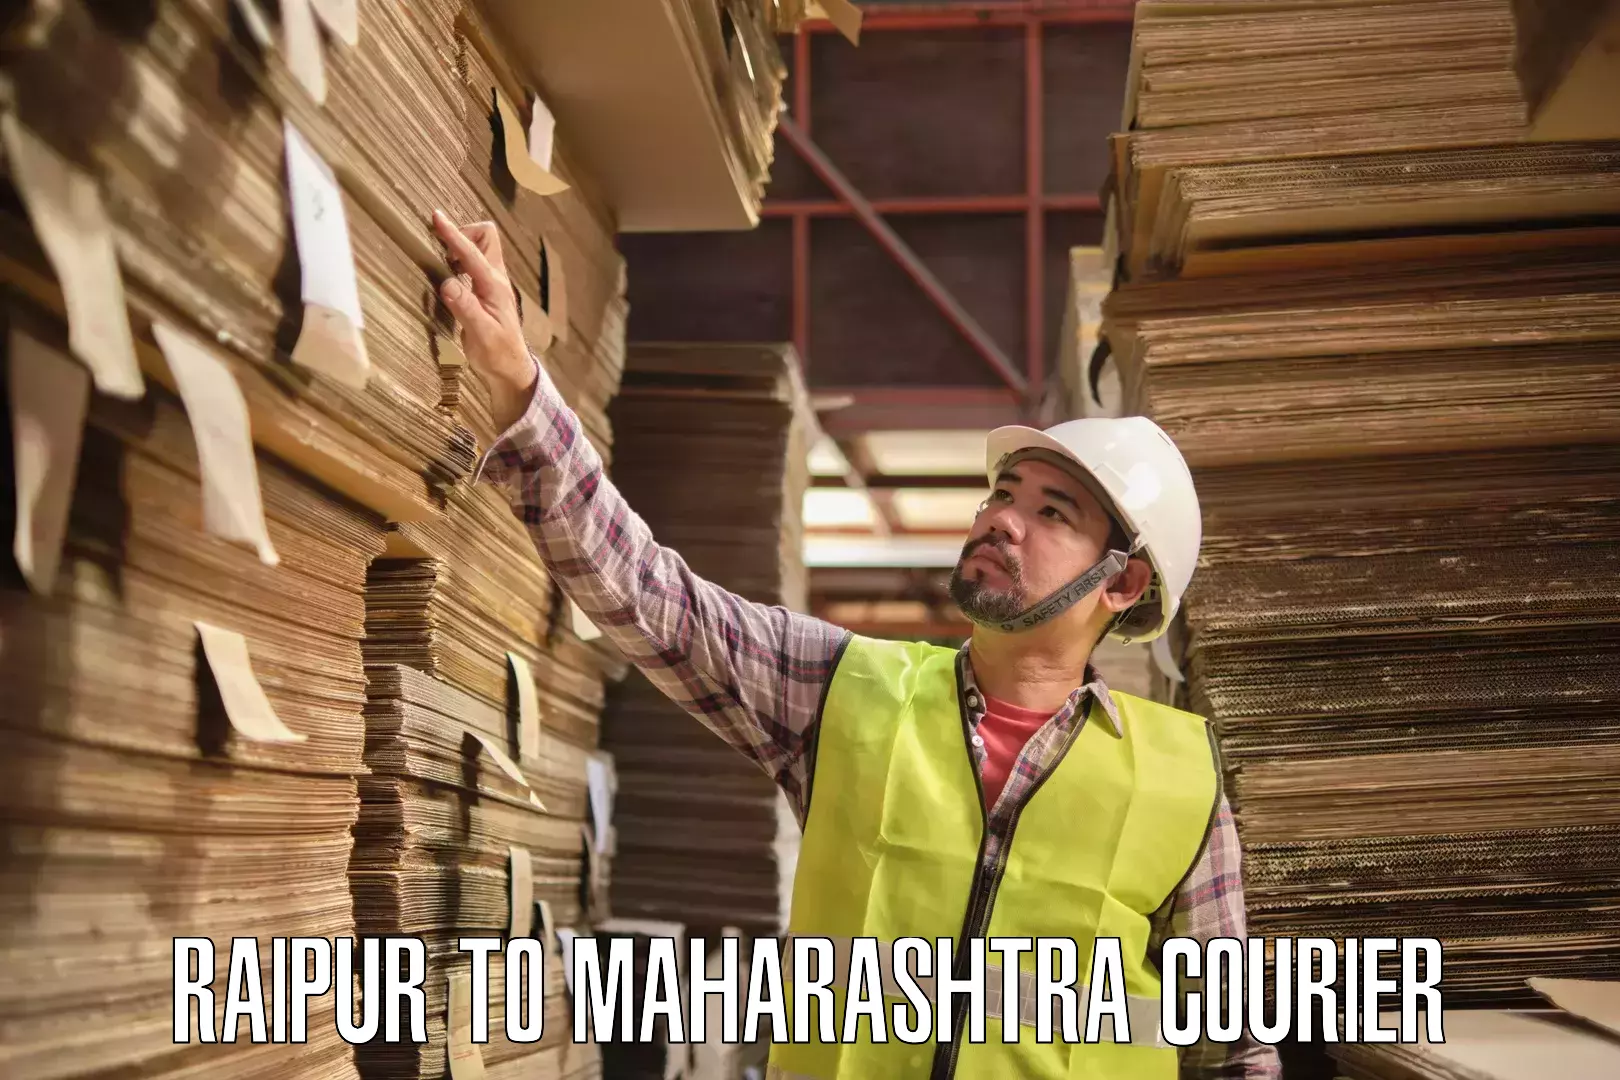 Global courier networks Raipur to Maharashtra